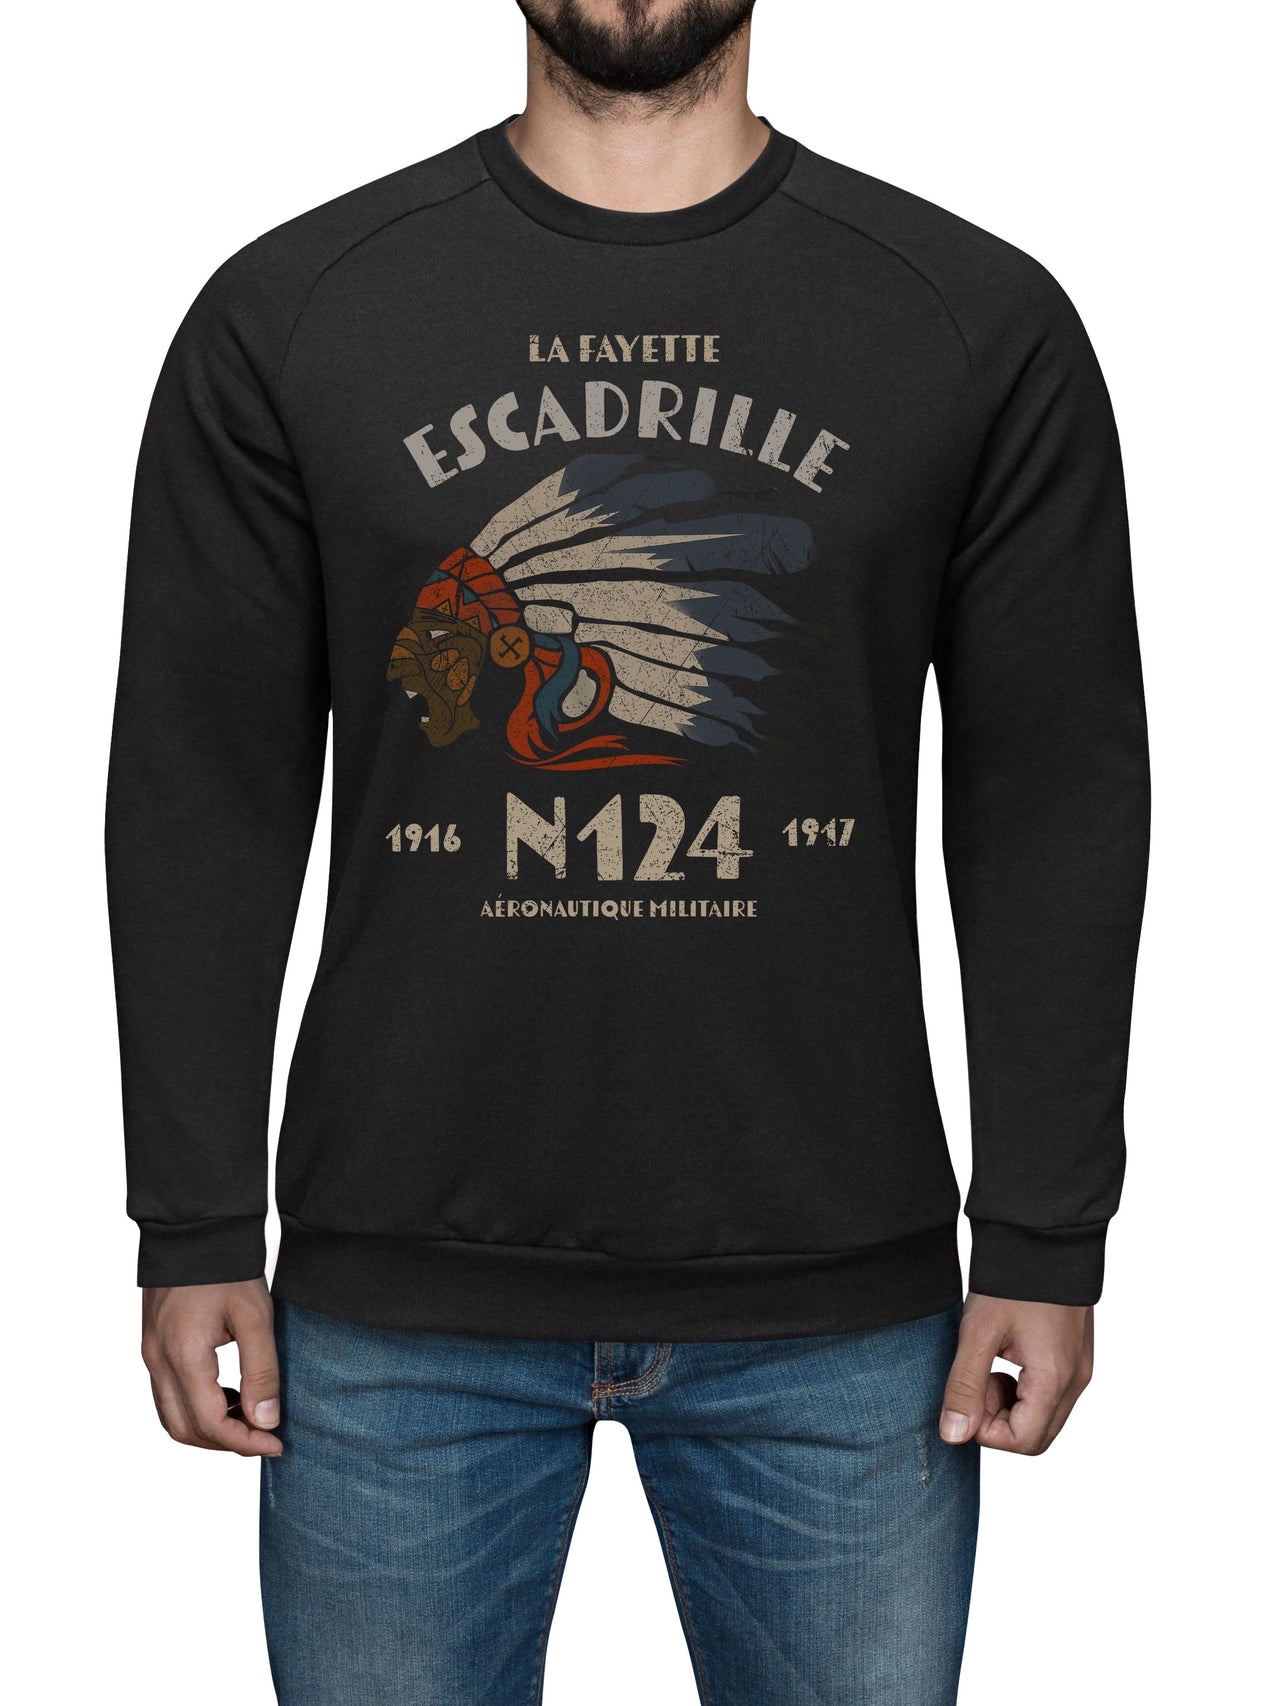 La Fayette Escadrille - Sweat Shirt